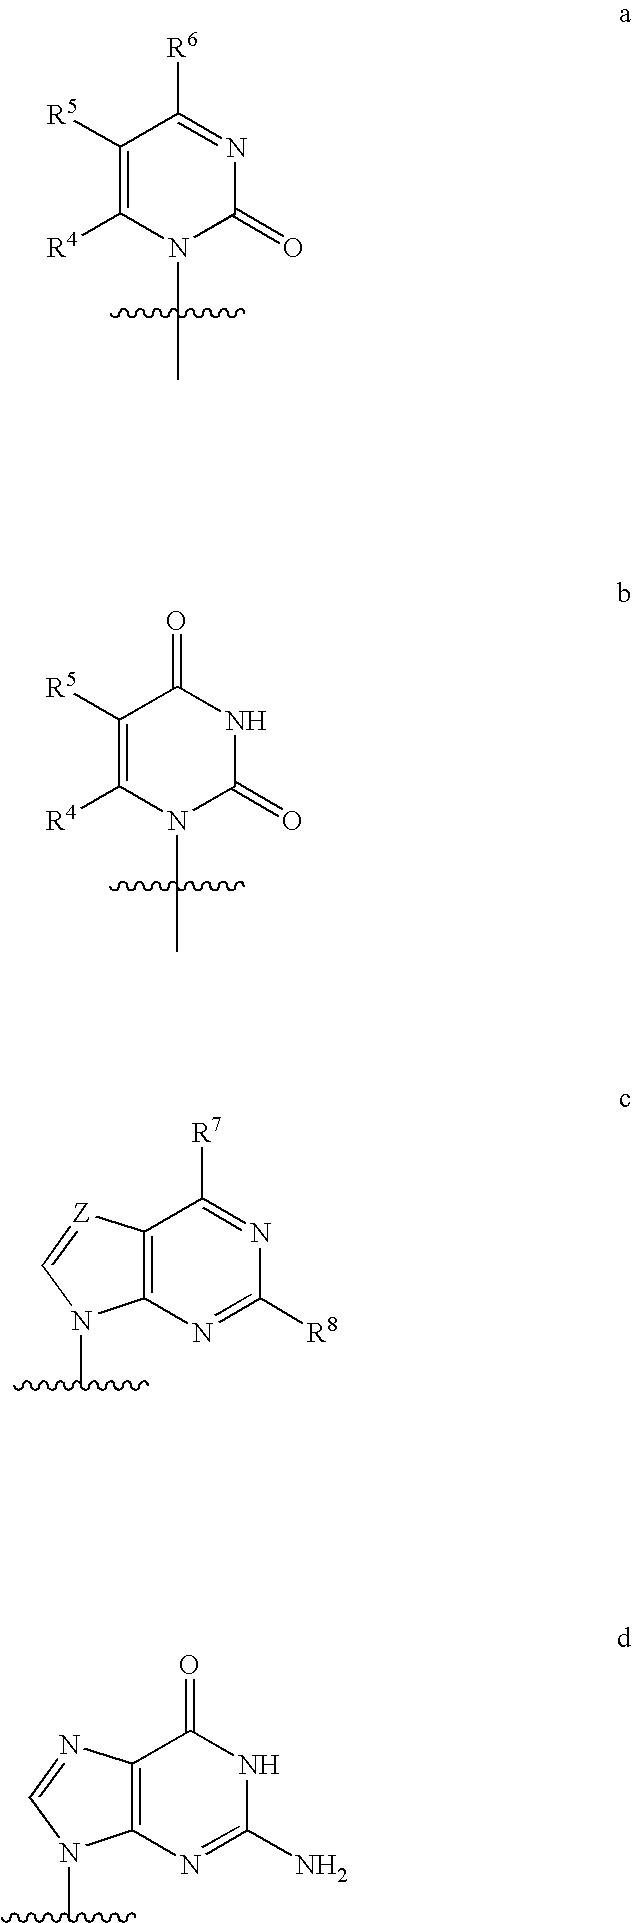 Nucleoside cyclicphosphates